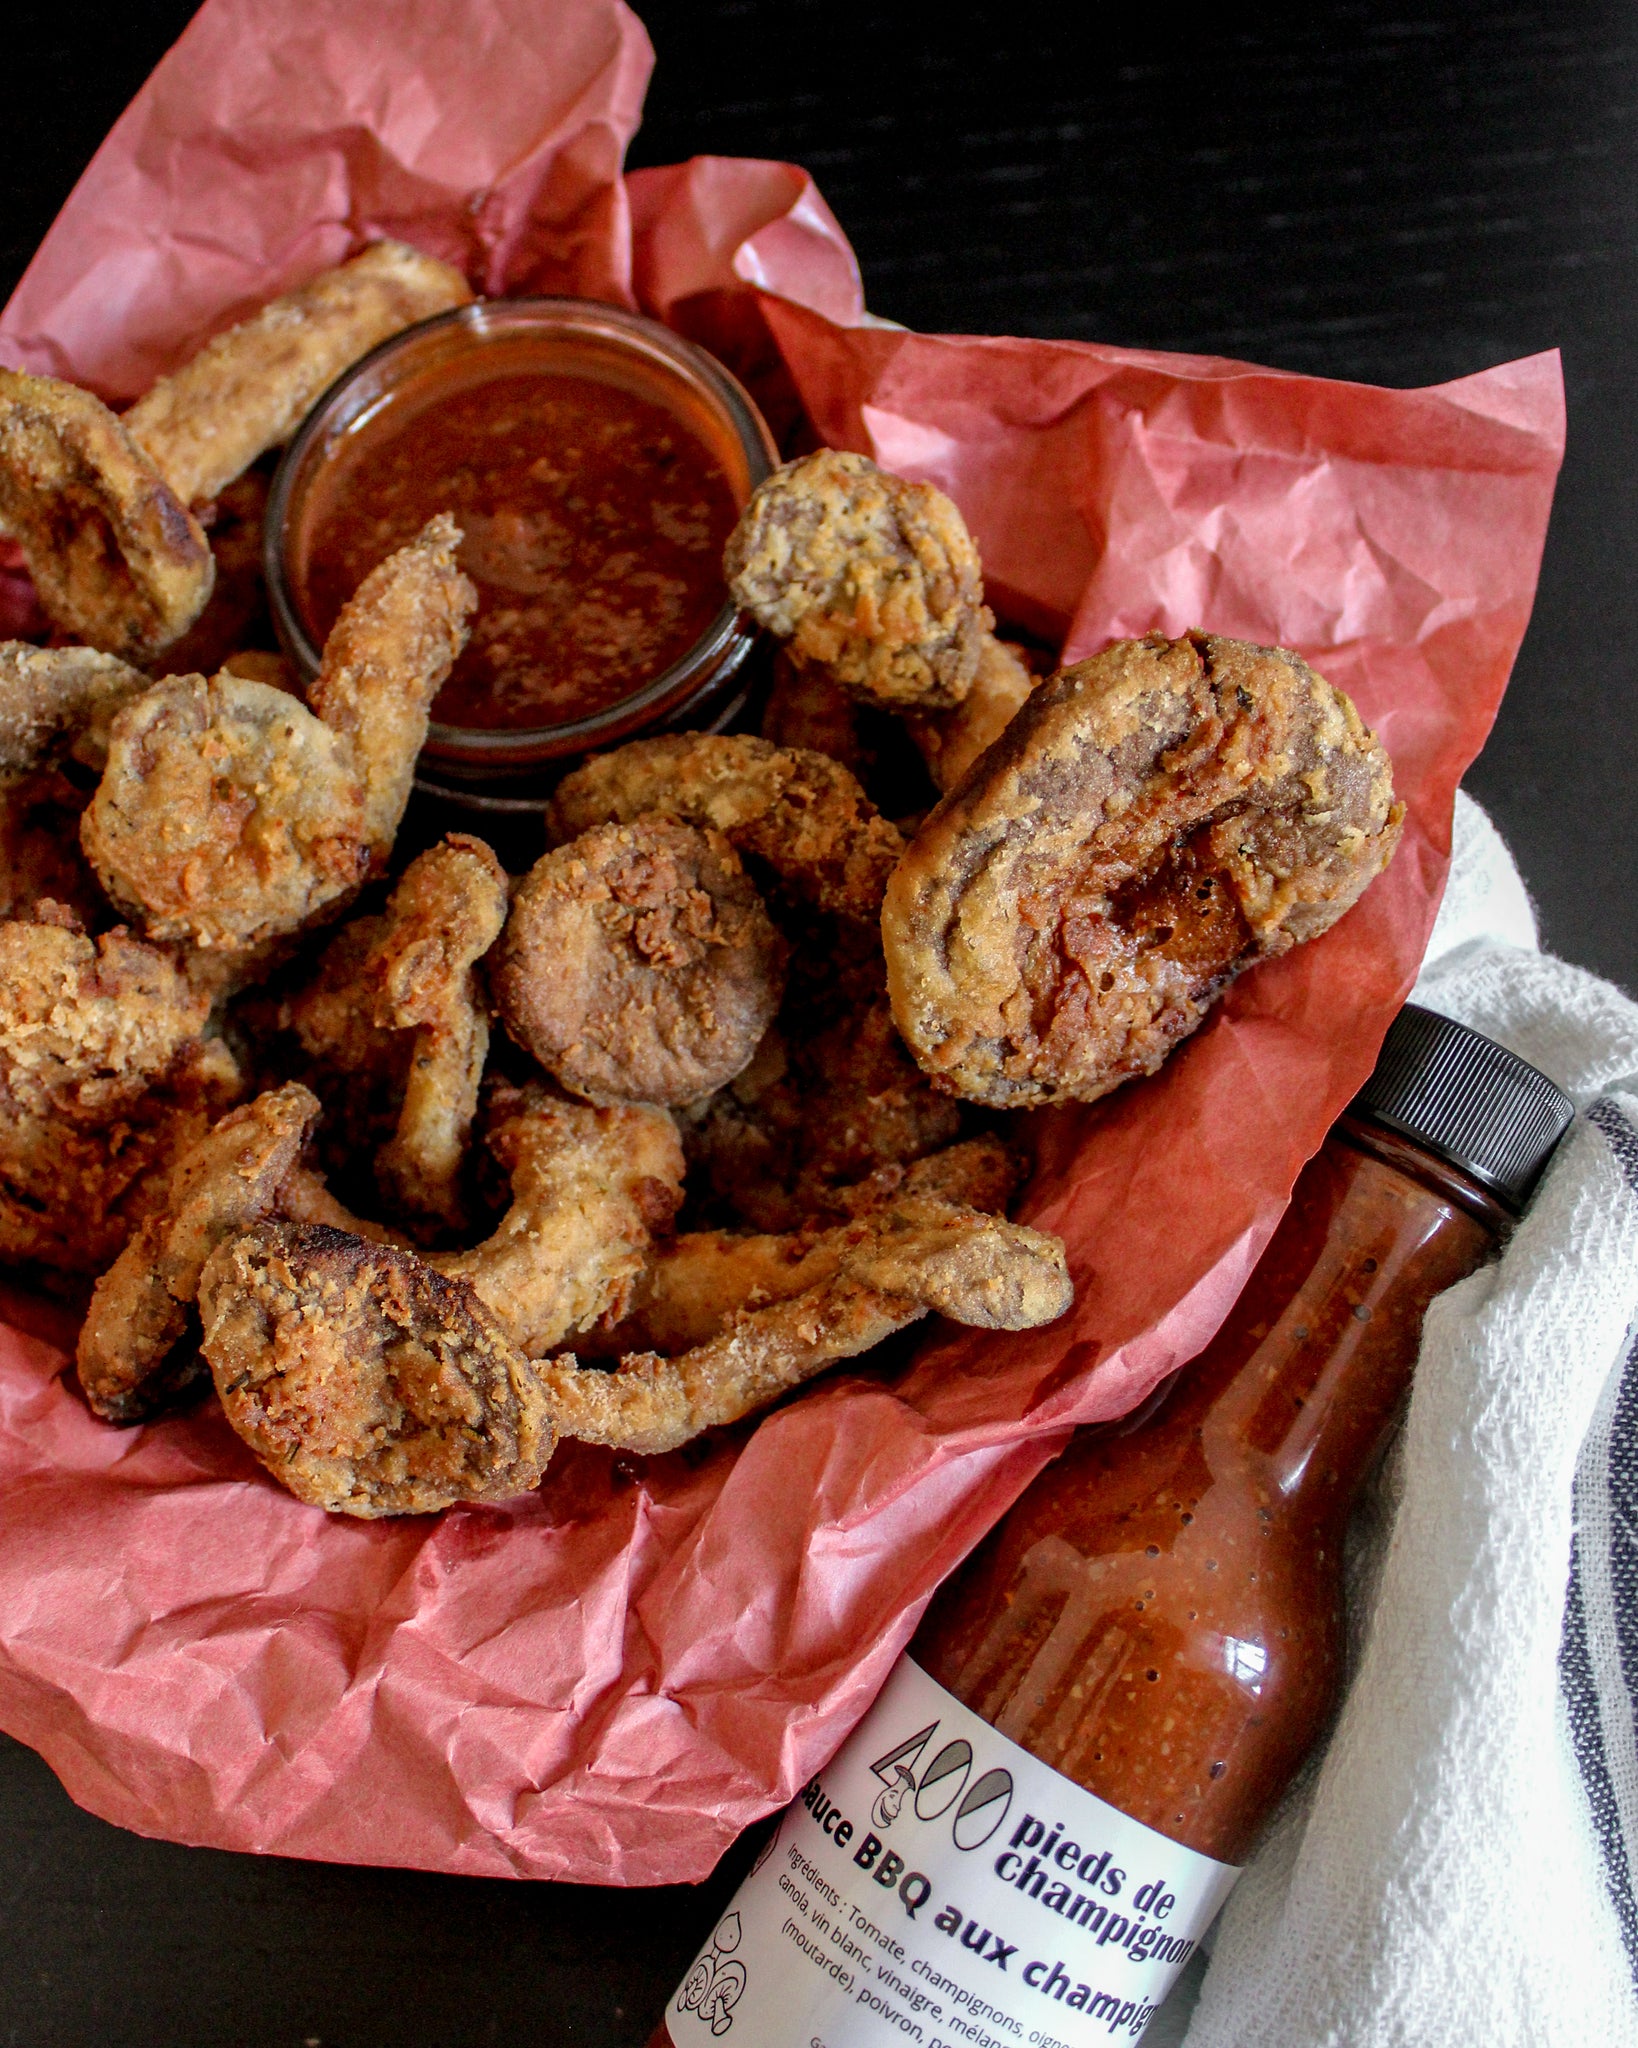 Vegan fried "chicken" with oyster mushroom